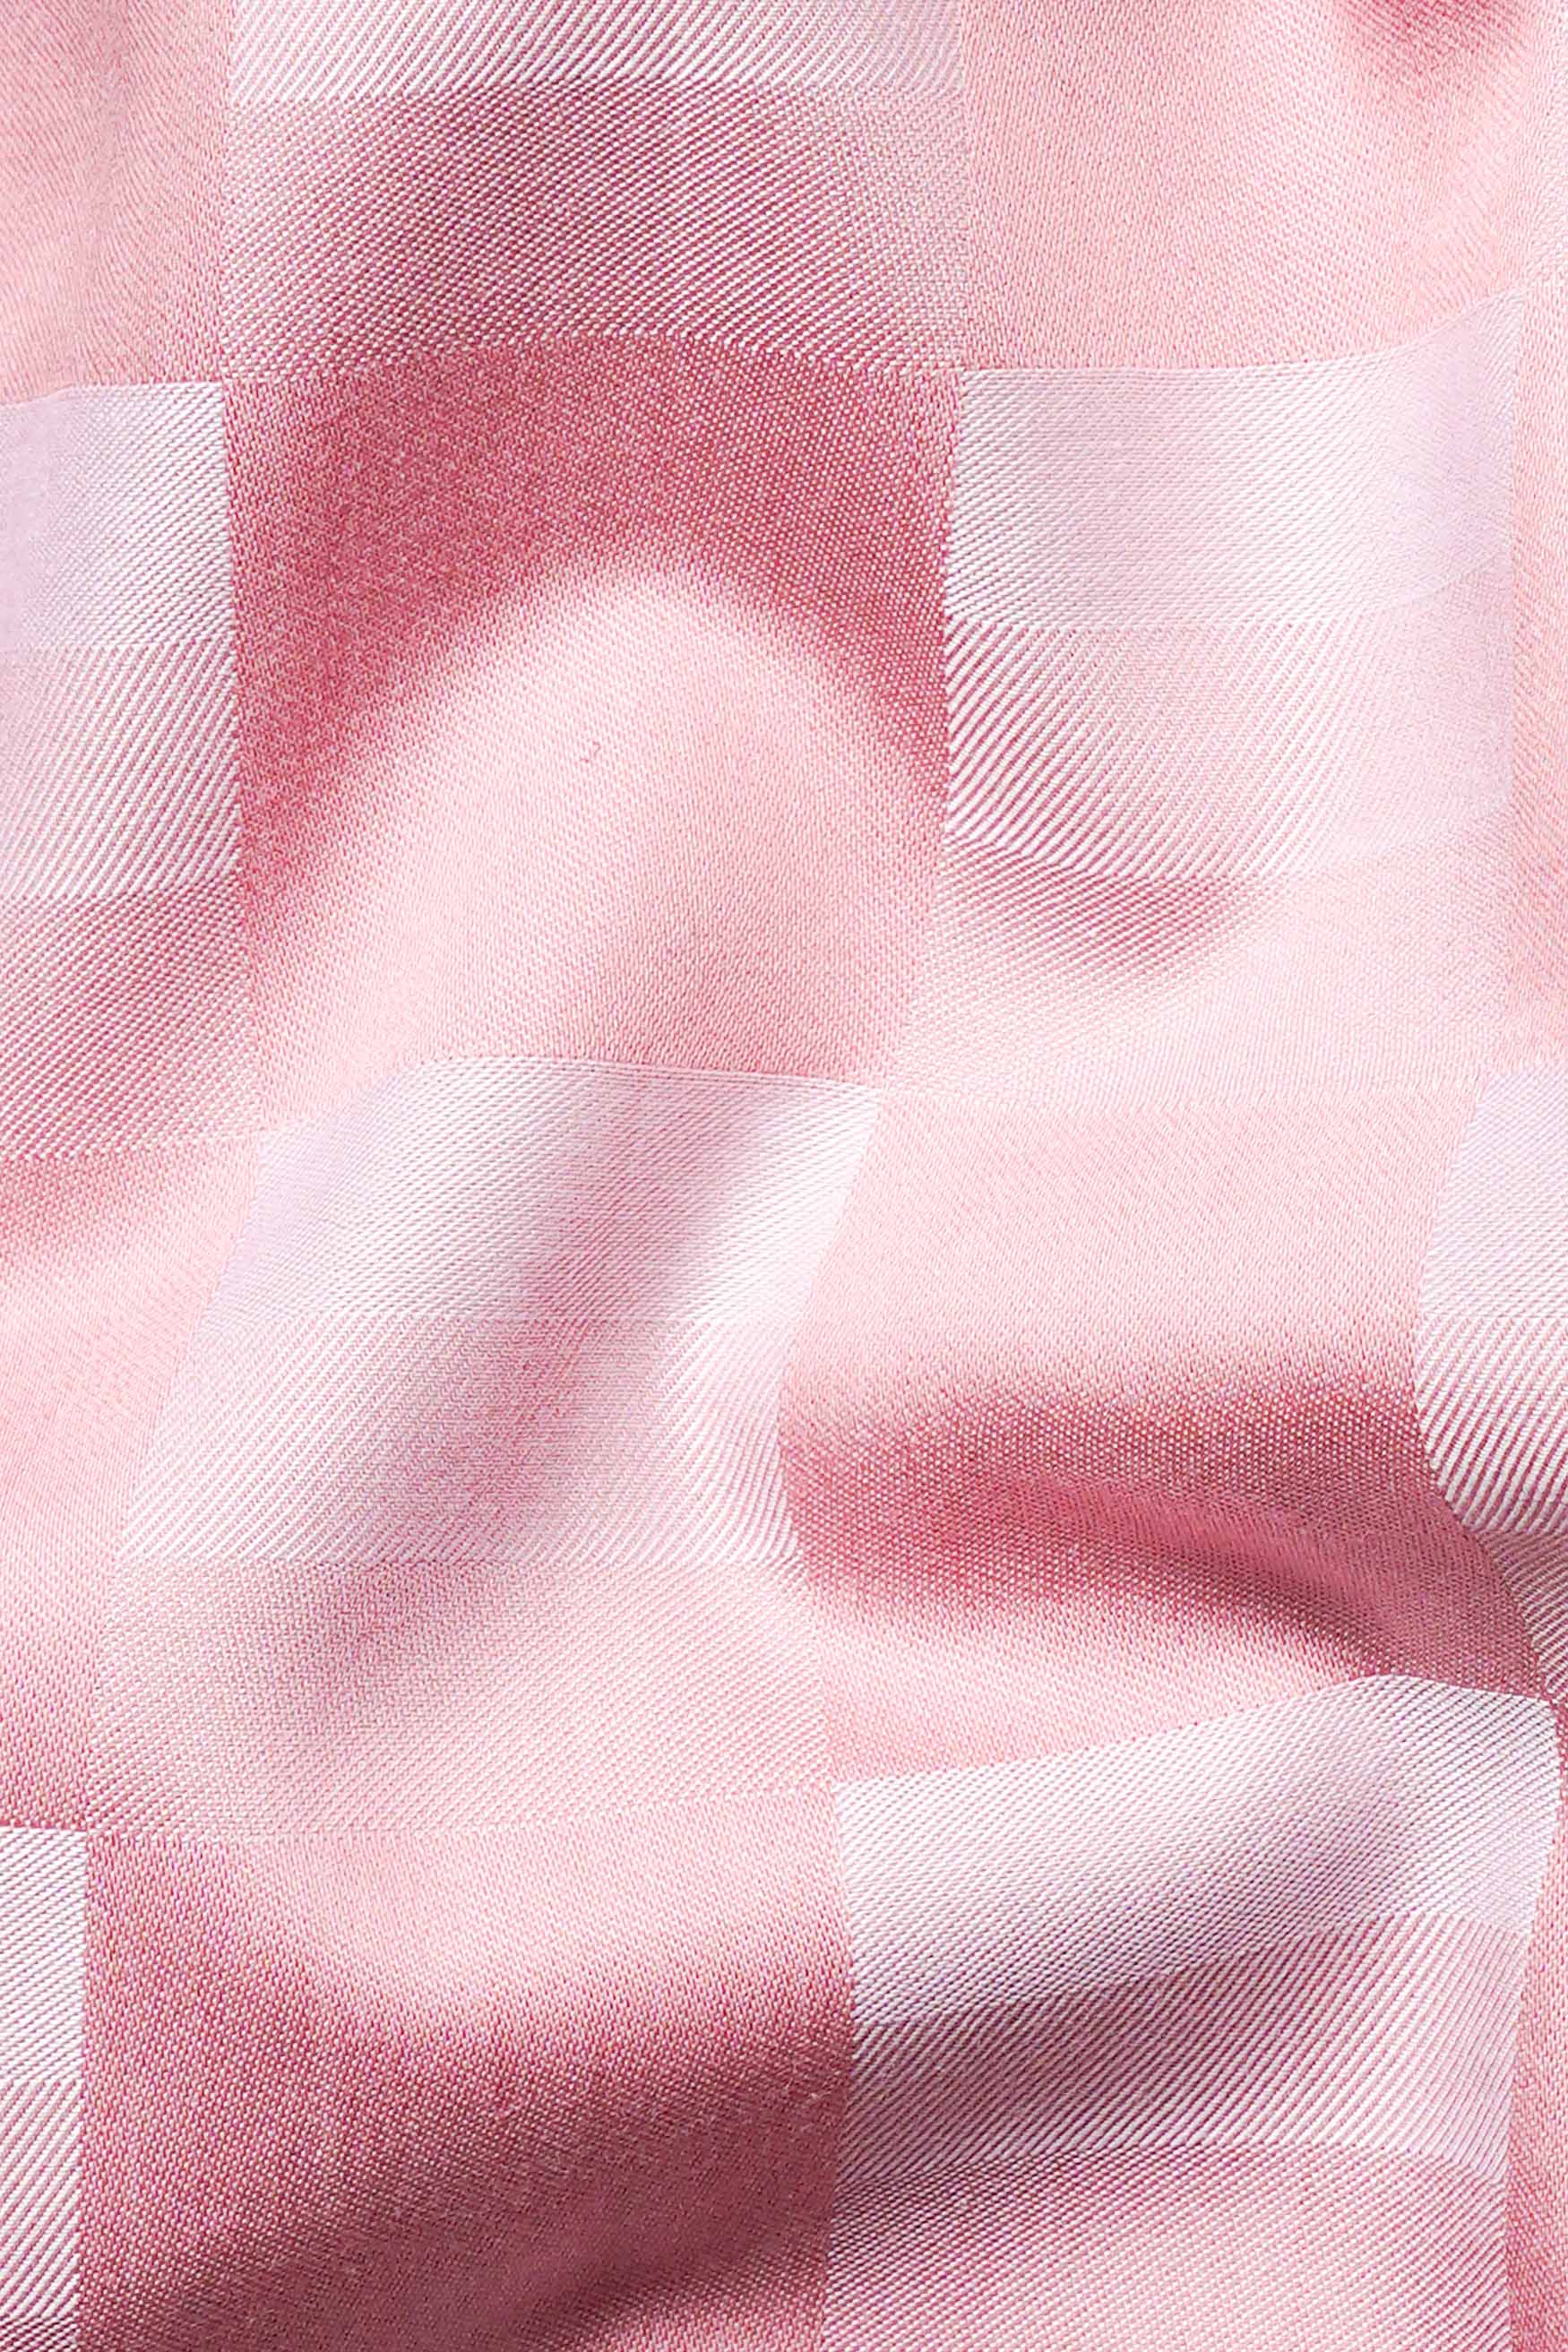 Blossom Pink and Prim Lavender Checked Jacquard Textured Premium Giza Cotton Shirt 11450-CA-38, 11450-CA-H-38, 11450-CA-39, 11450-CA-H-39, 11450-CA-40, 11450-CA-H-40, 11450-CA-42, 11450-CA-H-42, 11450-CA-44, 11450-CA-H-44, 11450-CA-46, 11450-CA-H-46, 11450-CA-48, 11450-CA-H-48, 11450-CA-50, 11450-CA-H-50, 11450-CA-52, 11450-CA-H-52